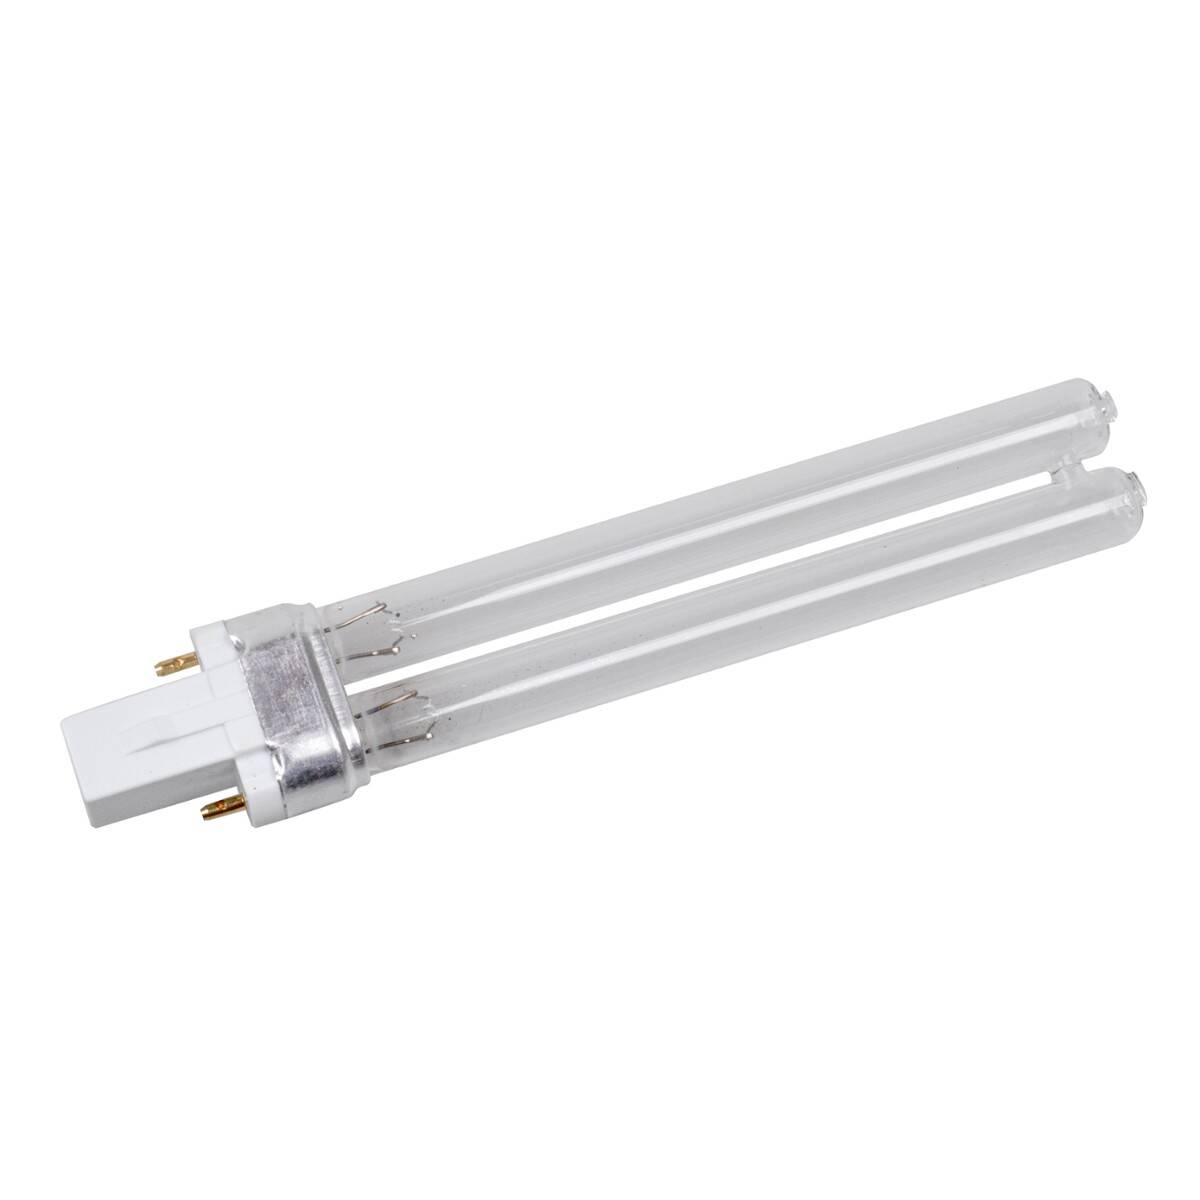 UV-Glühfaden 5W Happet (L-U031KW)